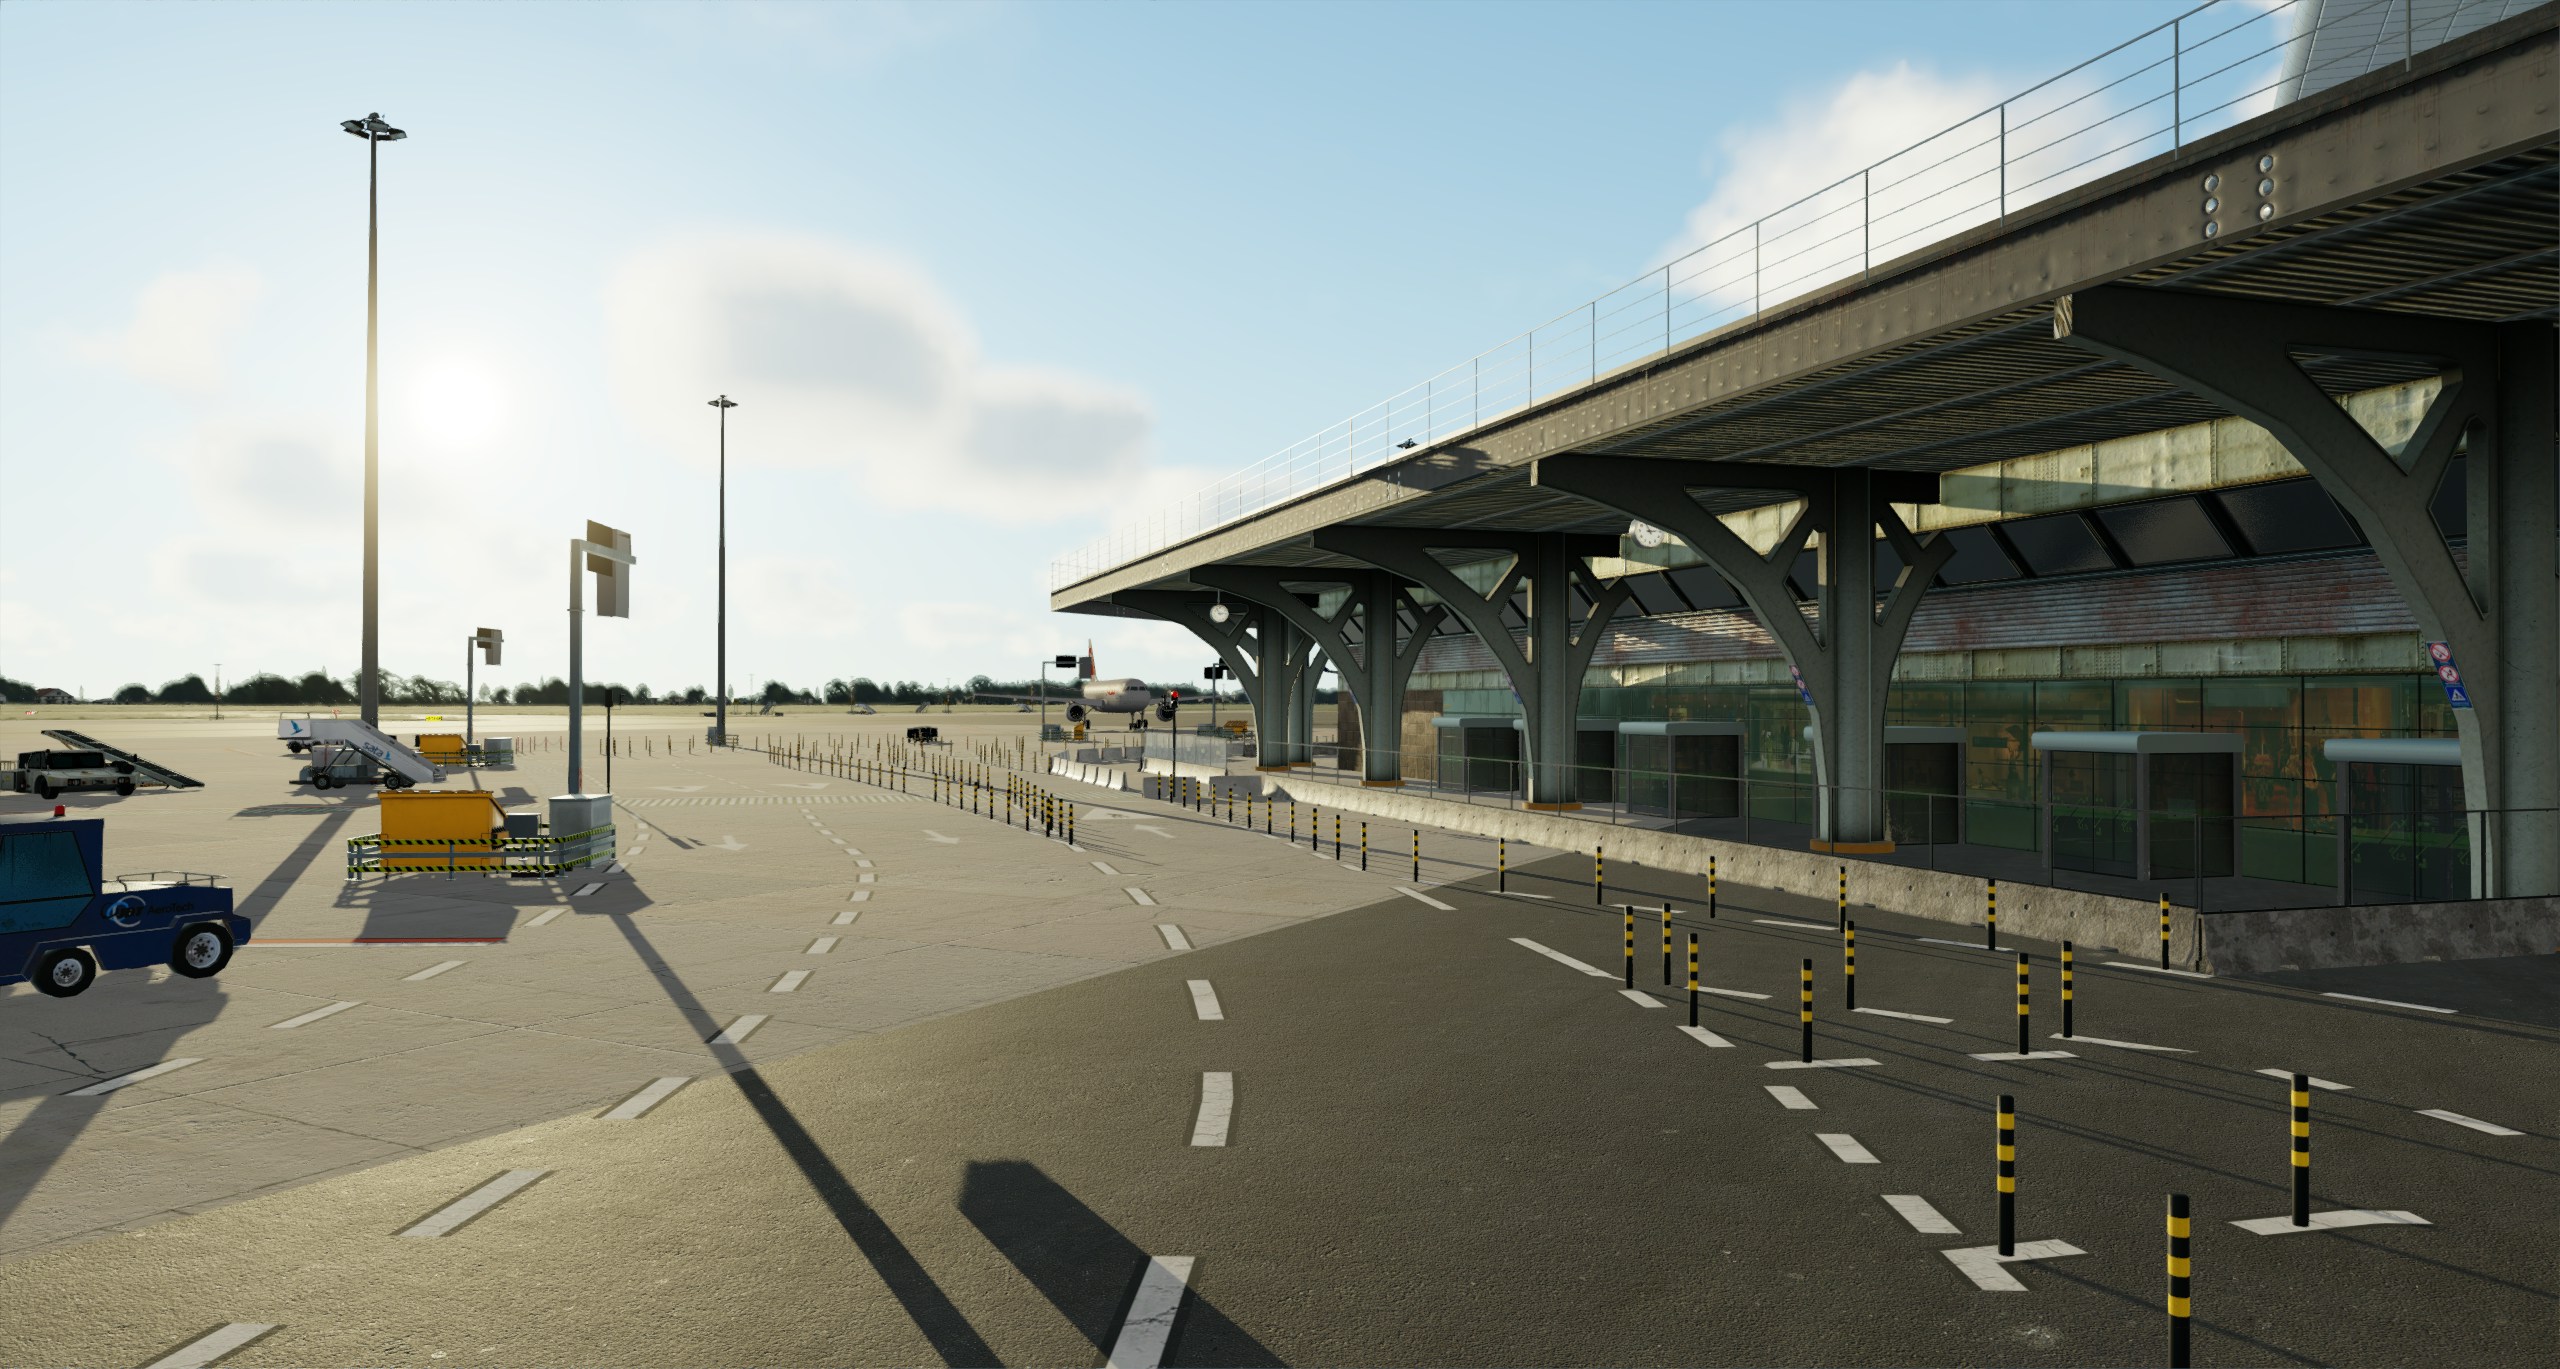 MK-STUDIOS Releases LPPR Porto Airport for P3D